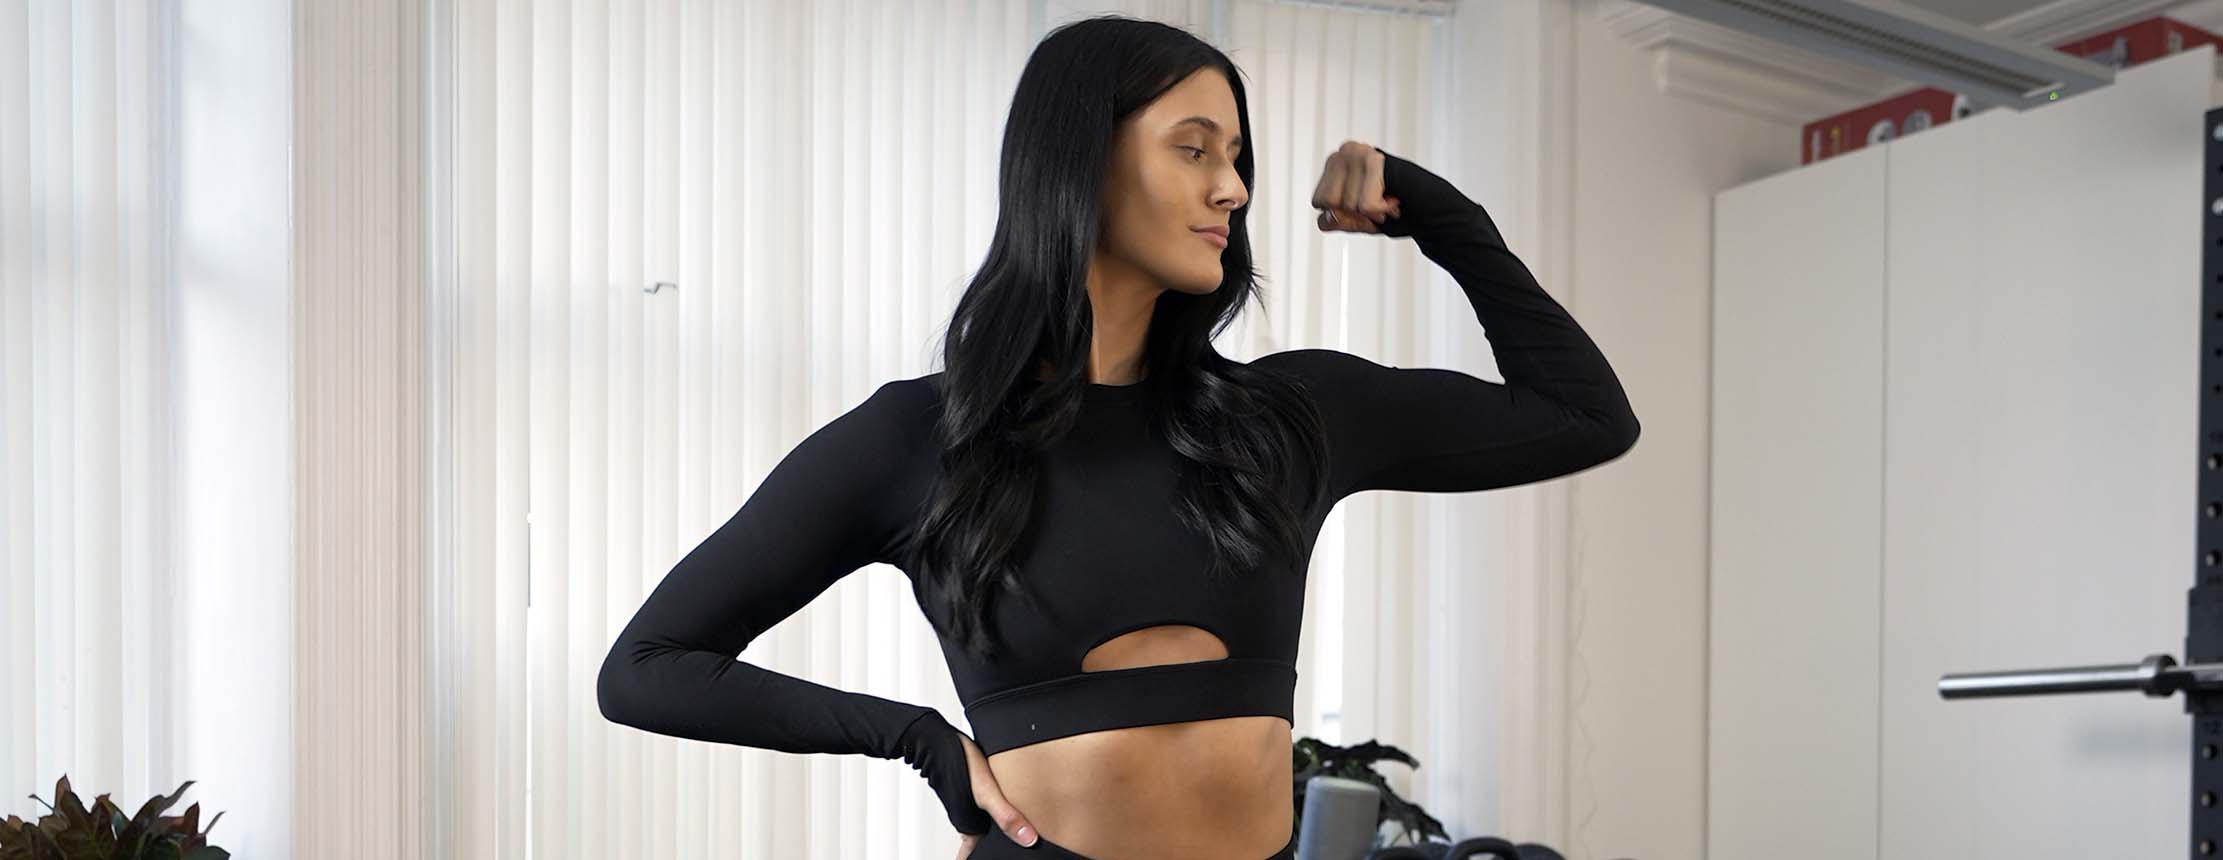 Shreddy fitness model flexes arm